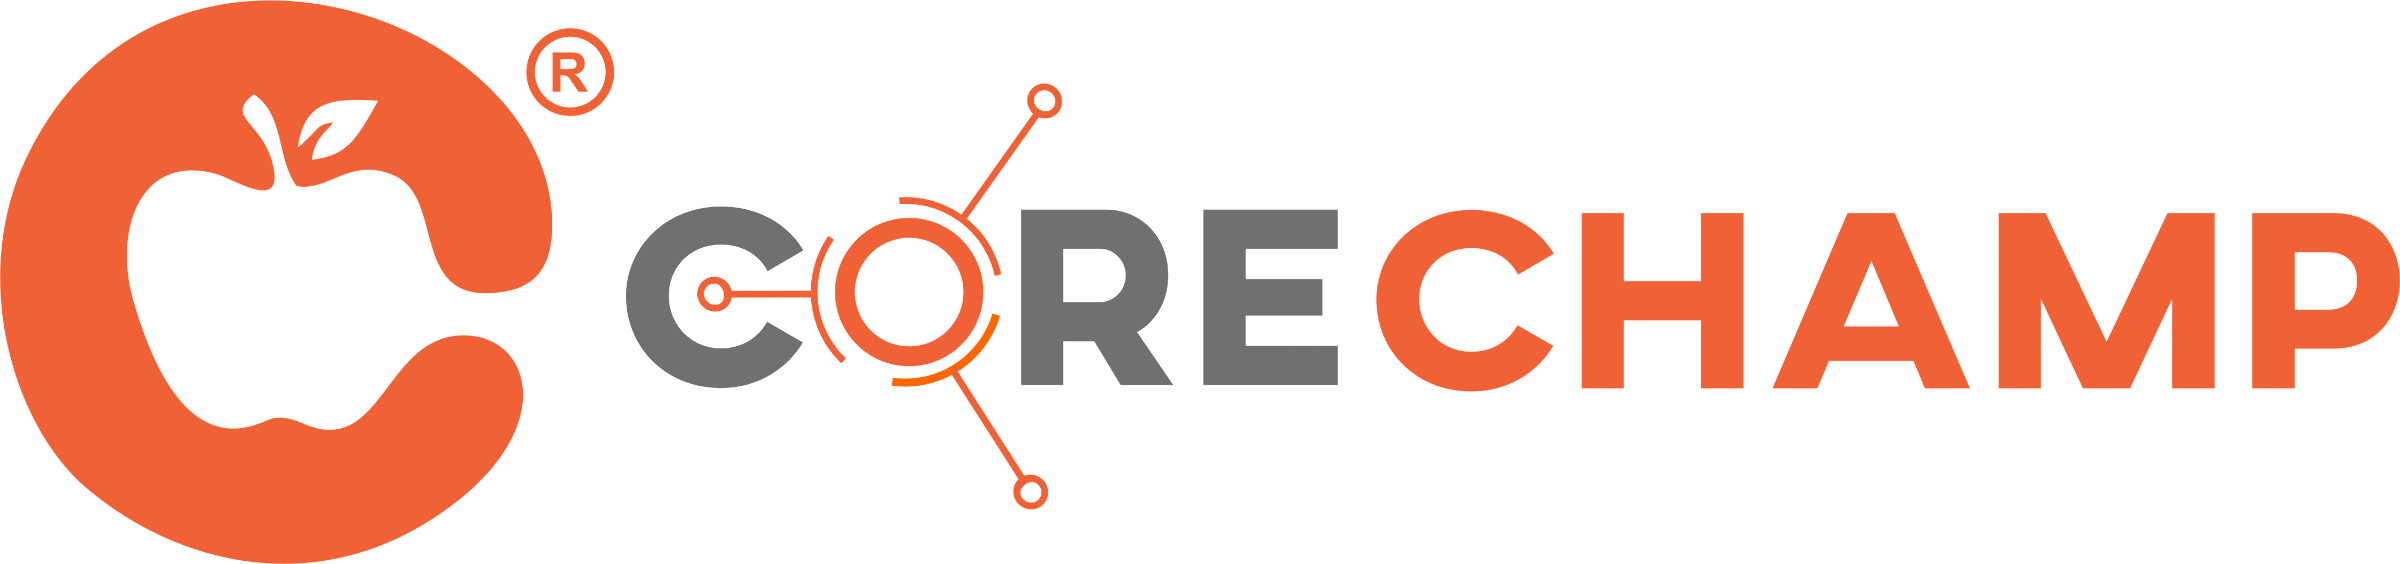 Corechamp_logo